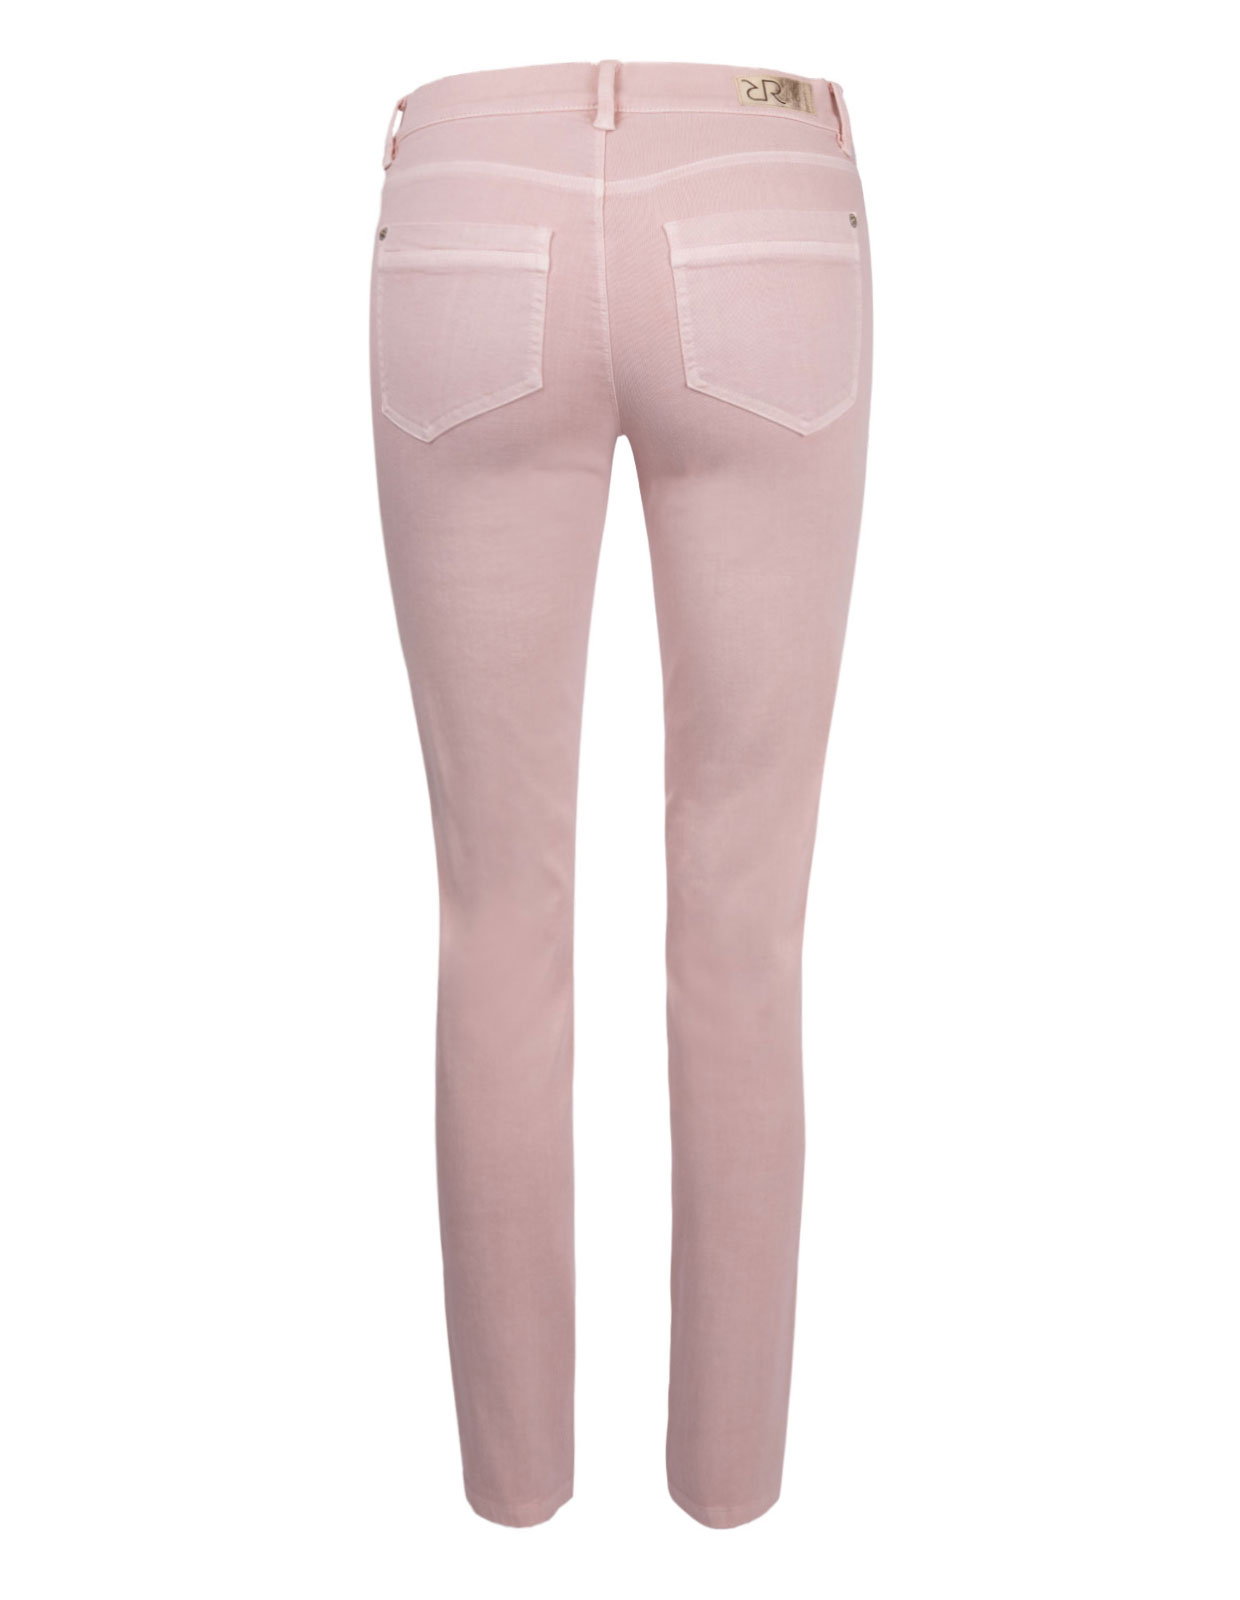 Nomi zip trousers Orkide Pink Stl 42